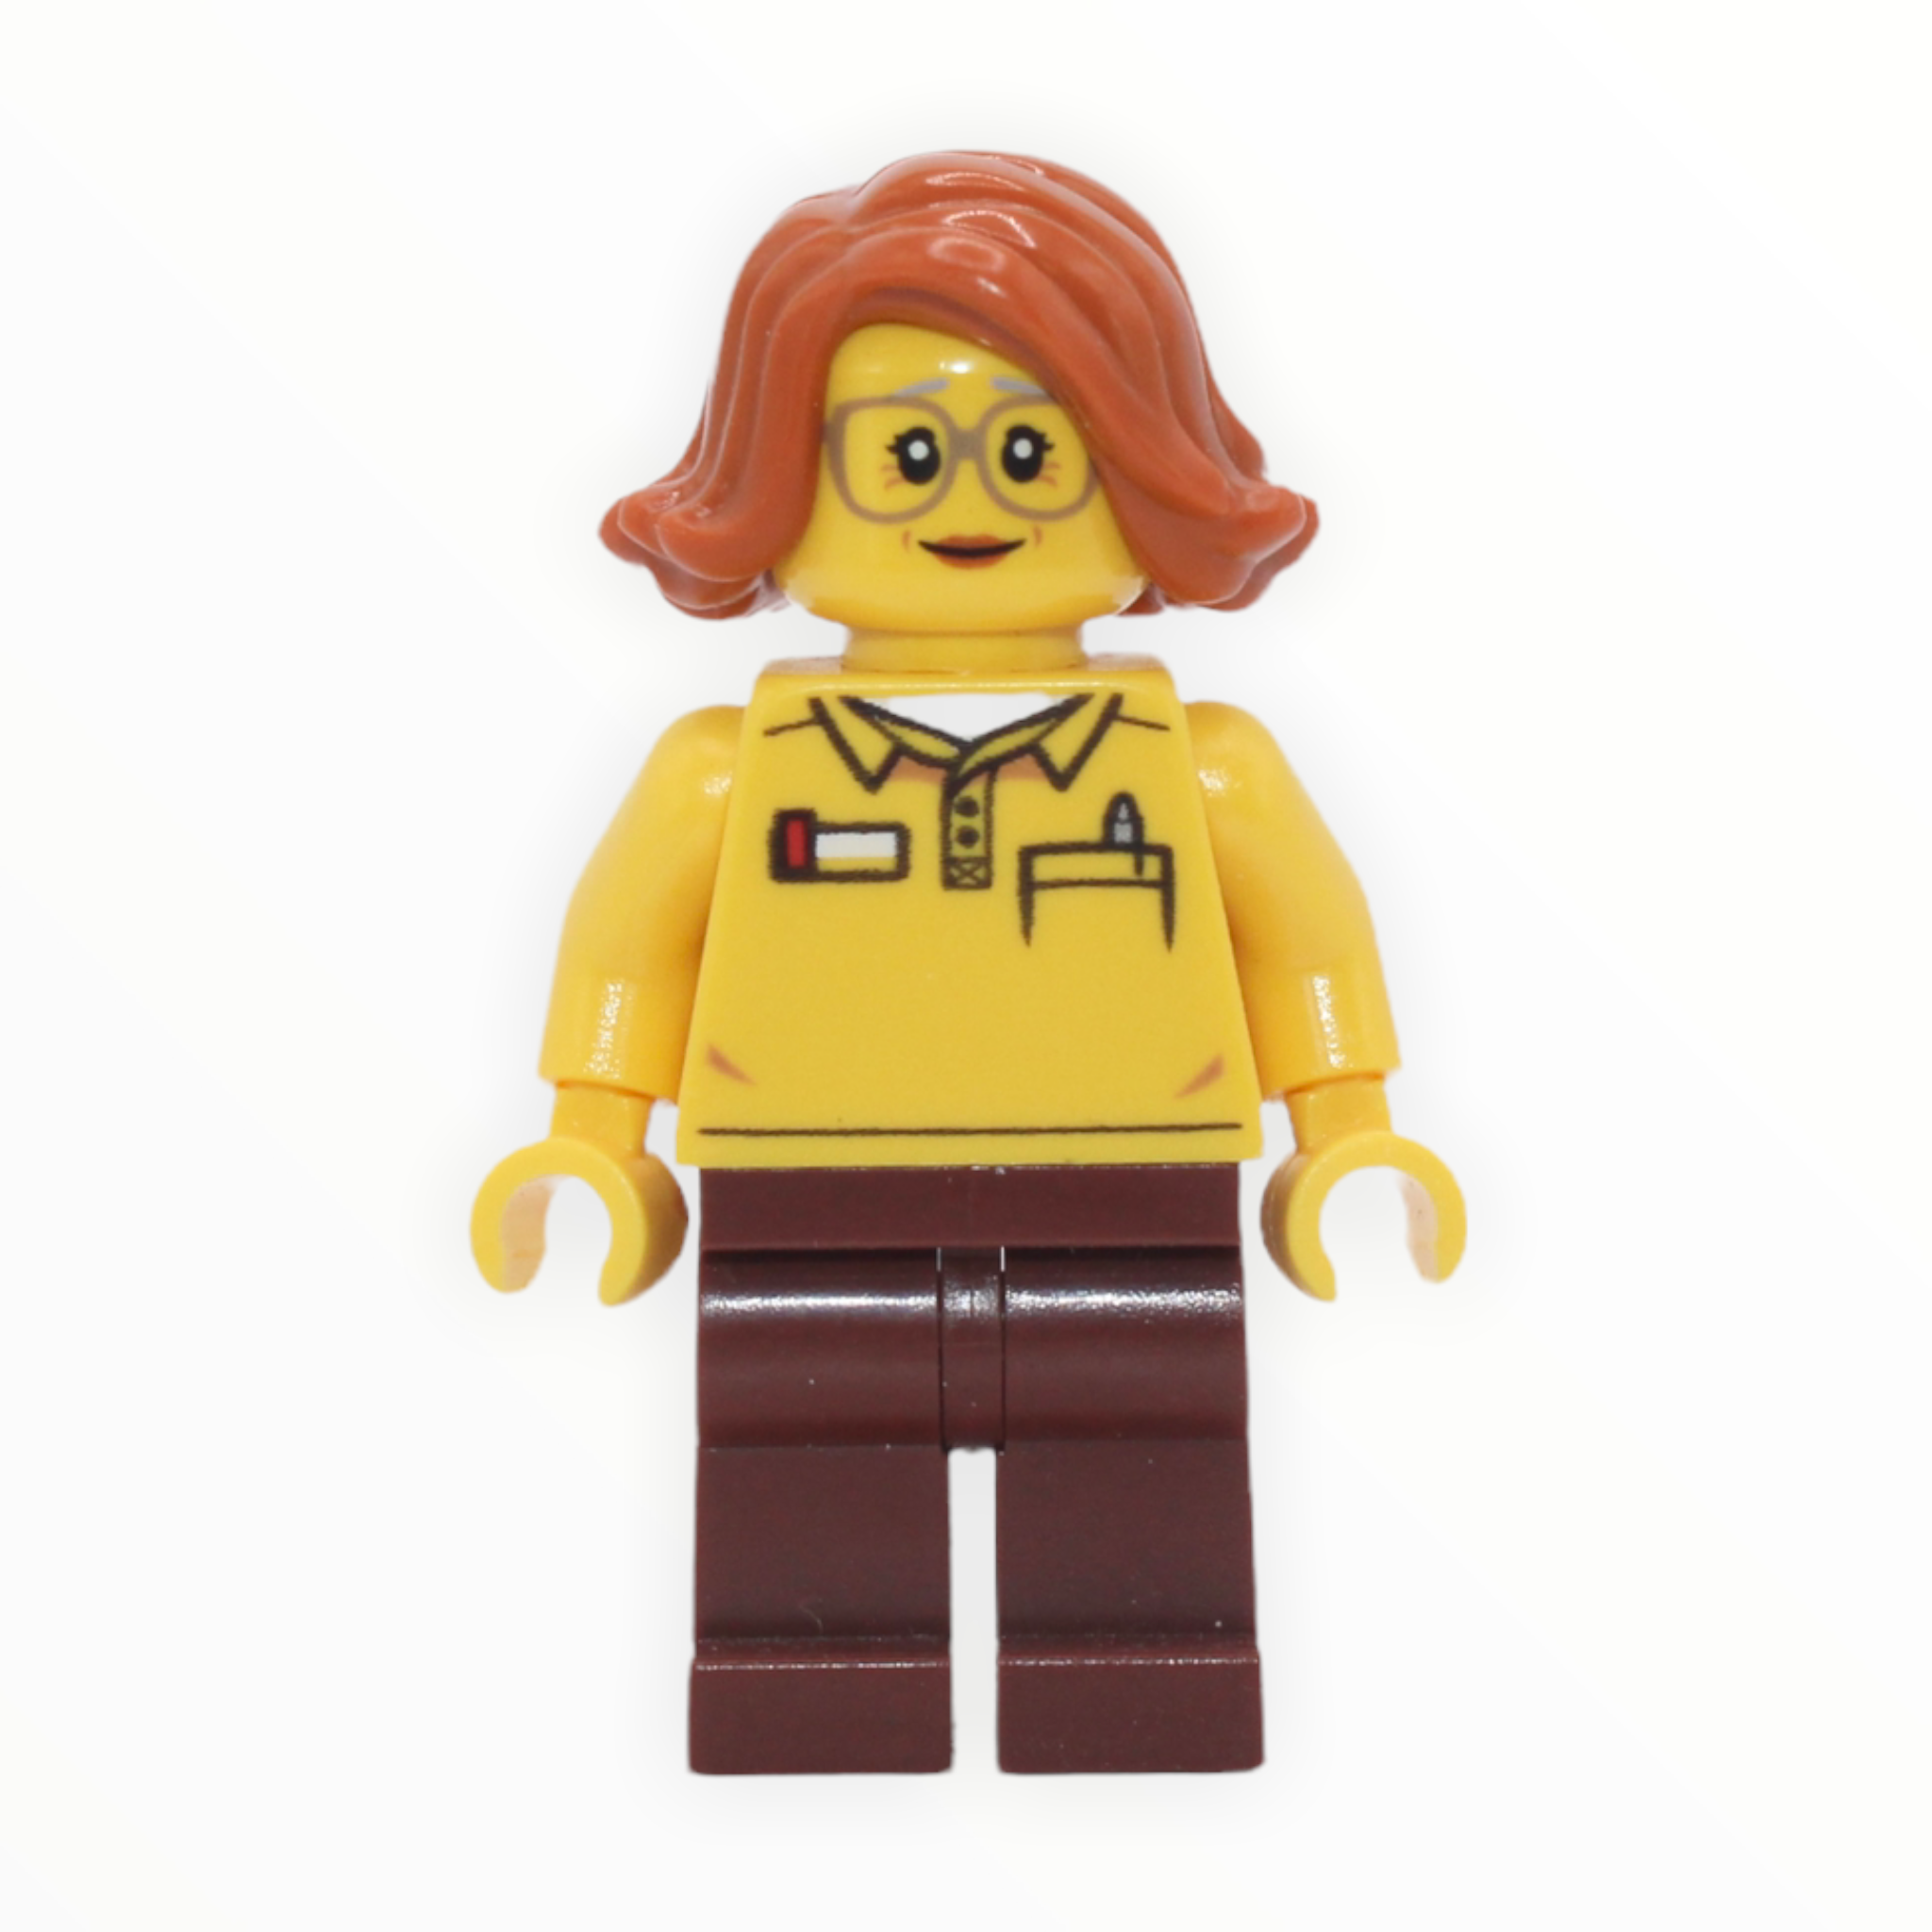 LEGO Store Employee dark orange hair)